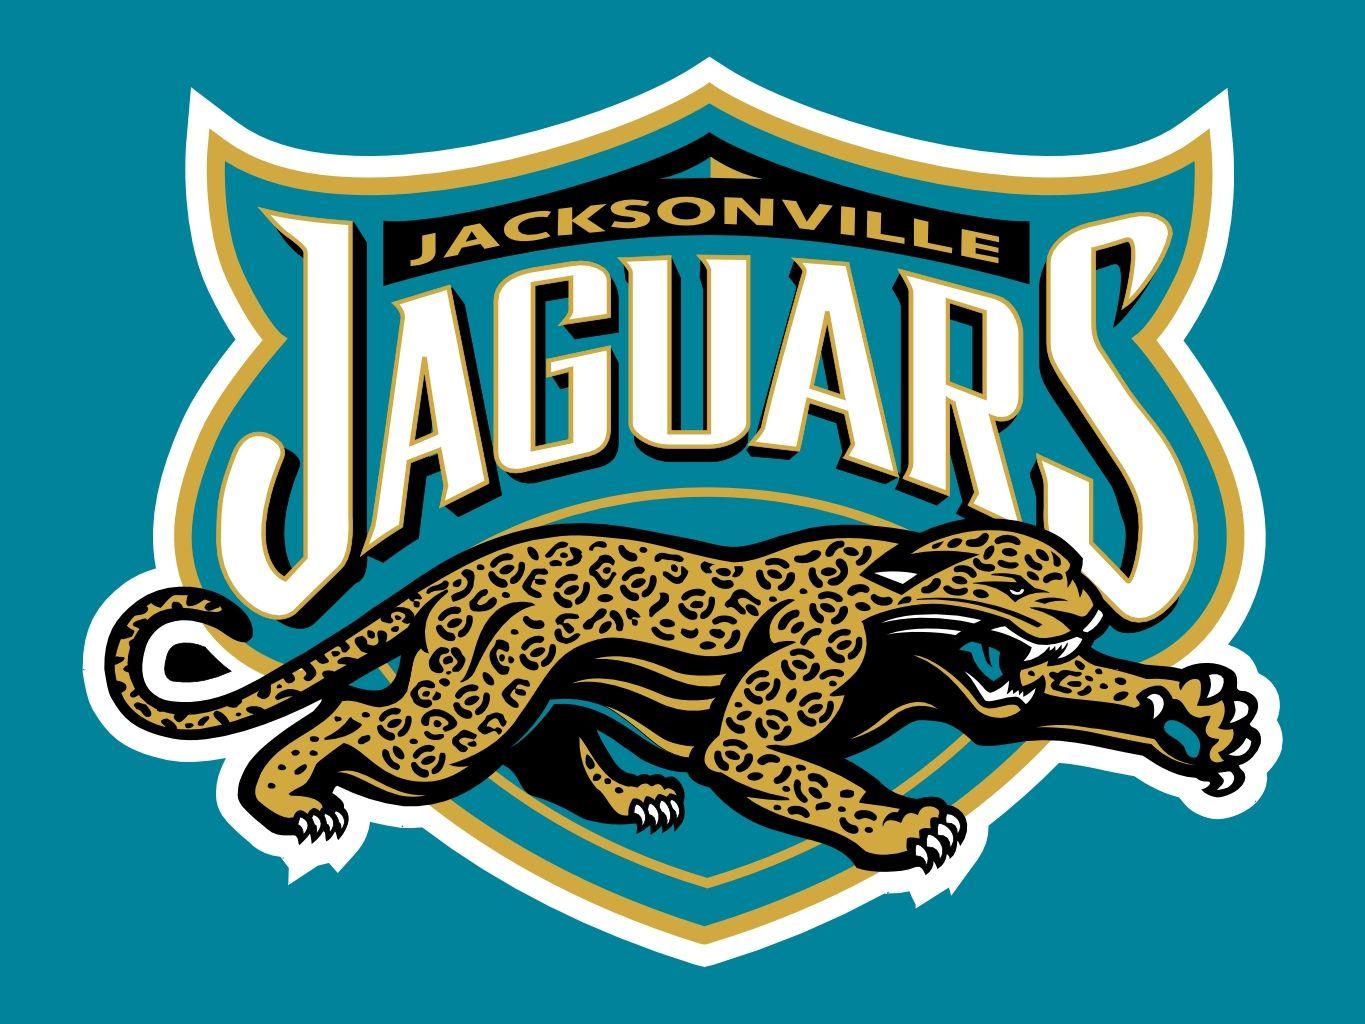 Jax Jaguars Logo - jacksonville jaguars logos - Yahoo Image Search Results | NFL / NBA ...